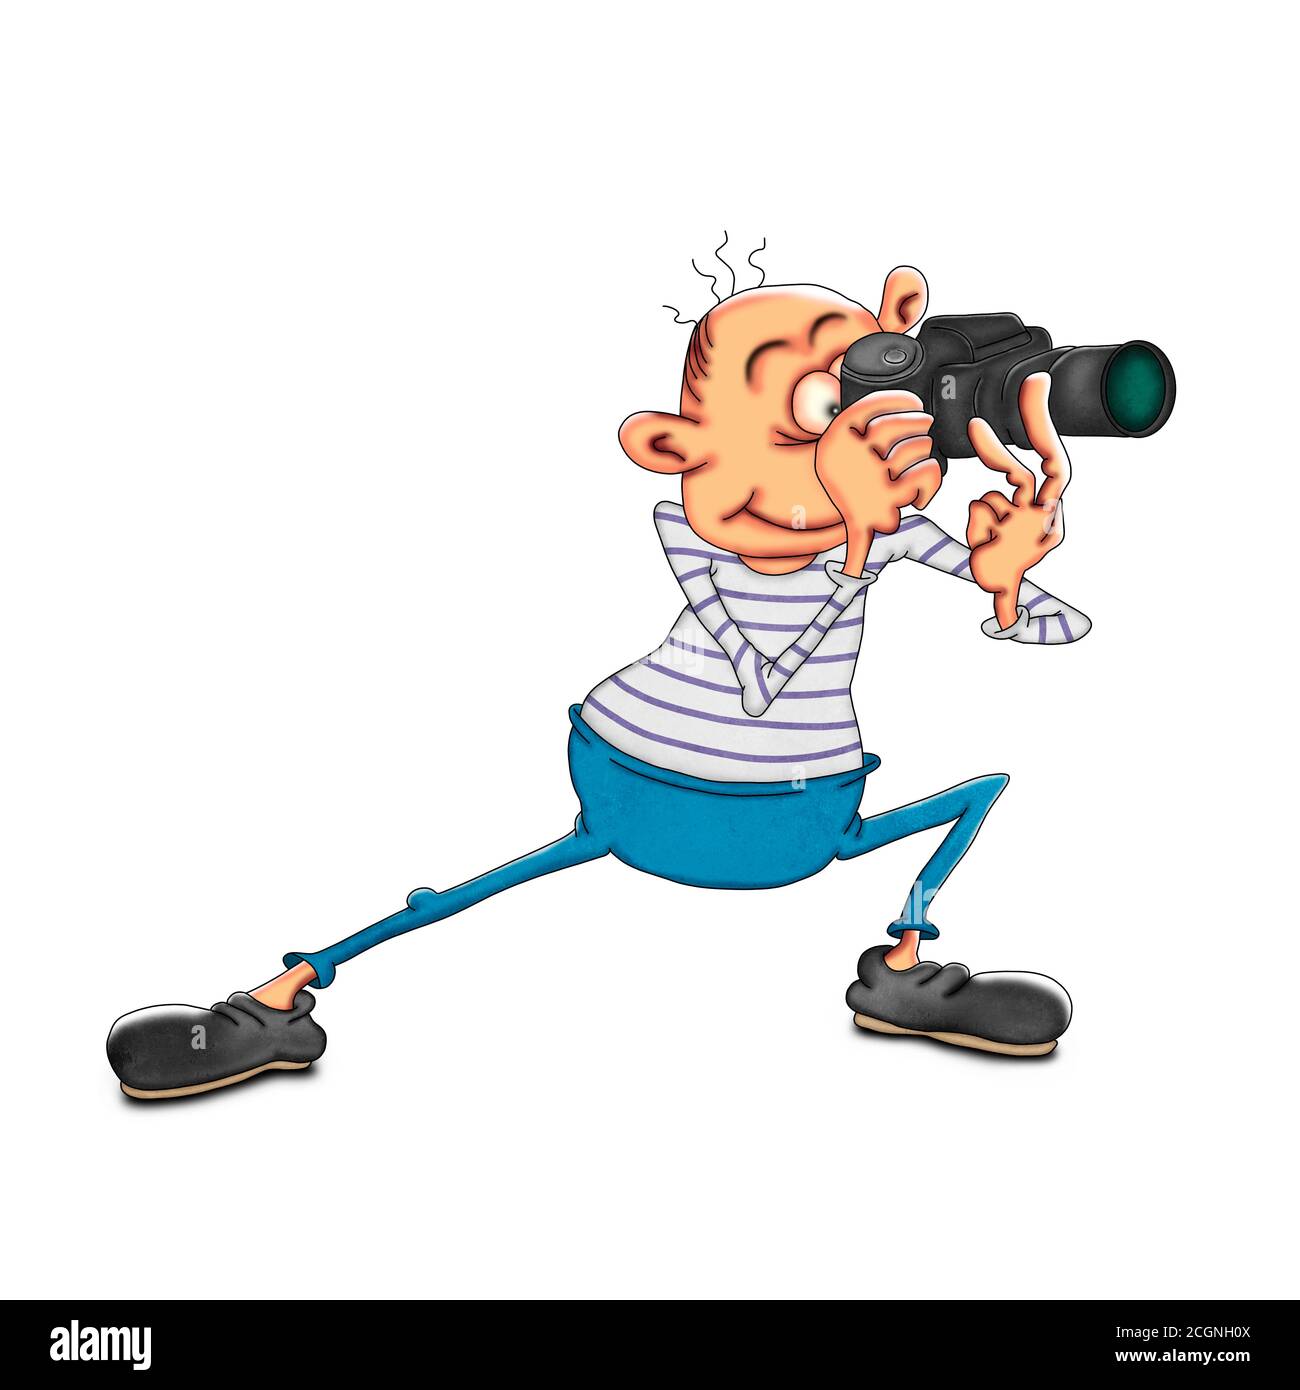 Male photographer holding a camera. Cartoon illustration on a white background.. Stock Photo